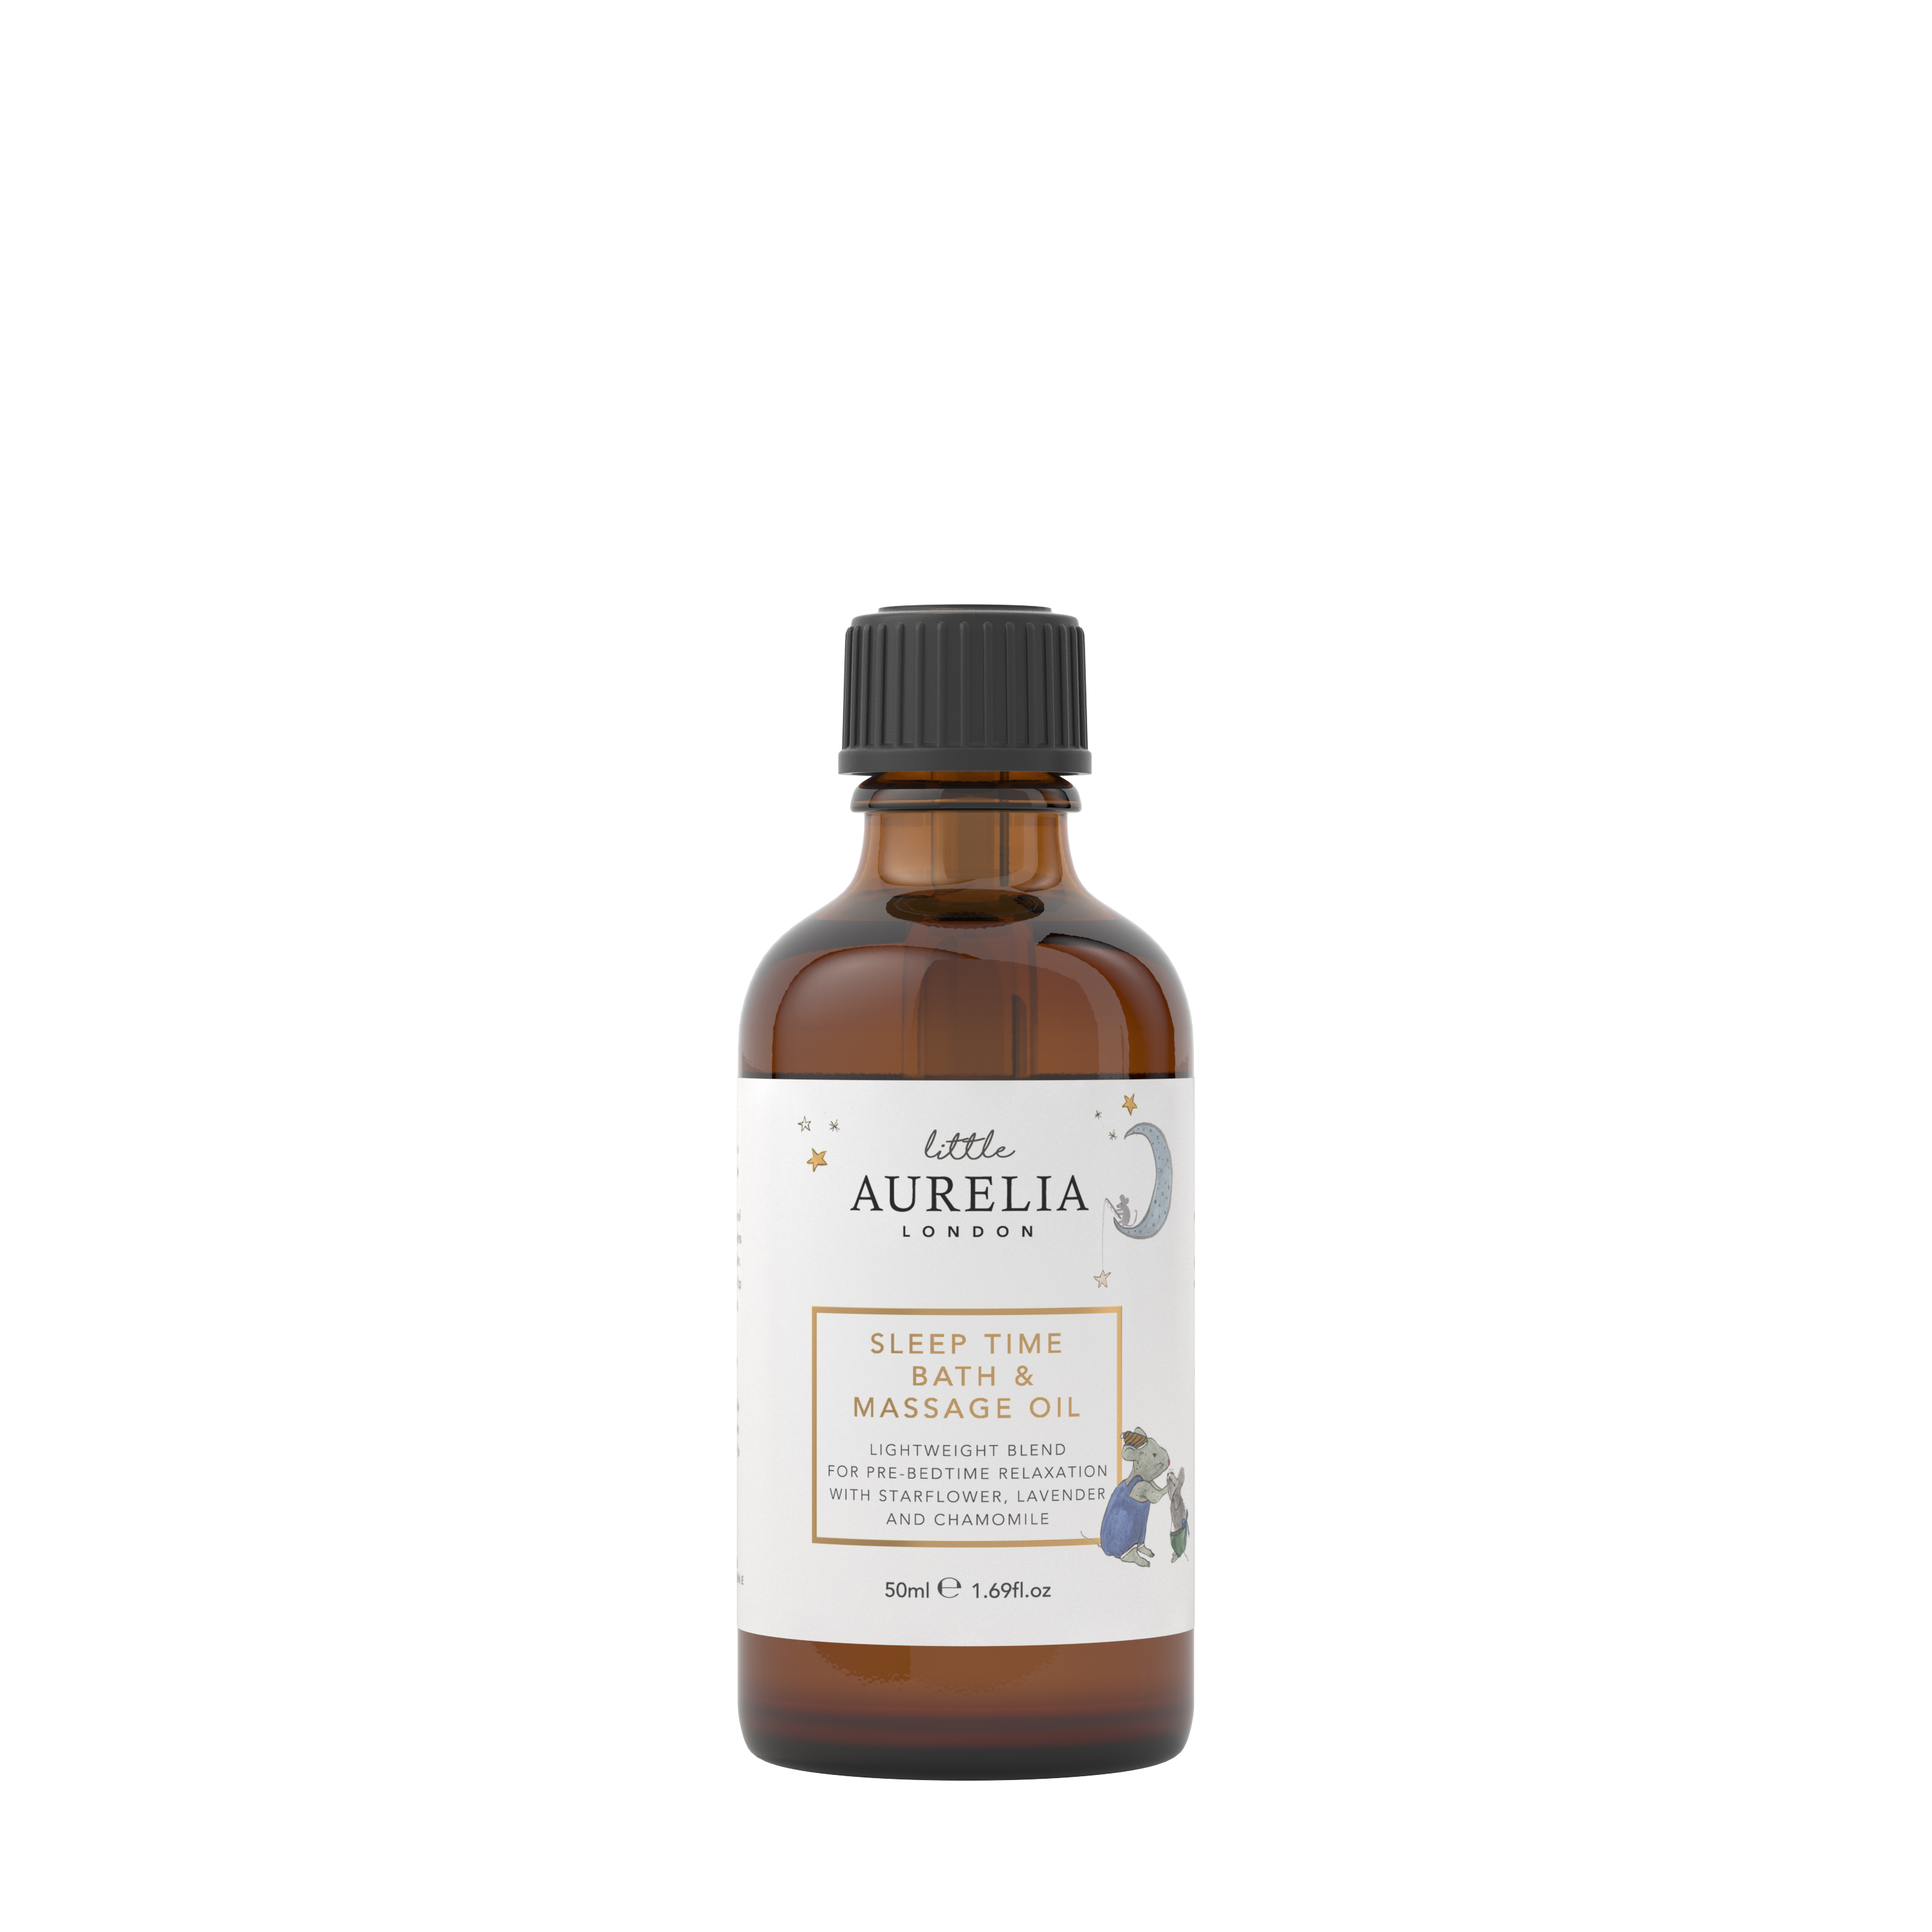 AURELIA LONDON Little Aurelia Sleep Time Bath & Massage Oil 50 ml